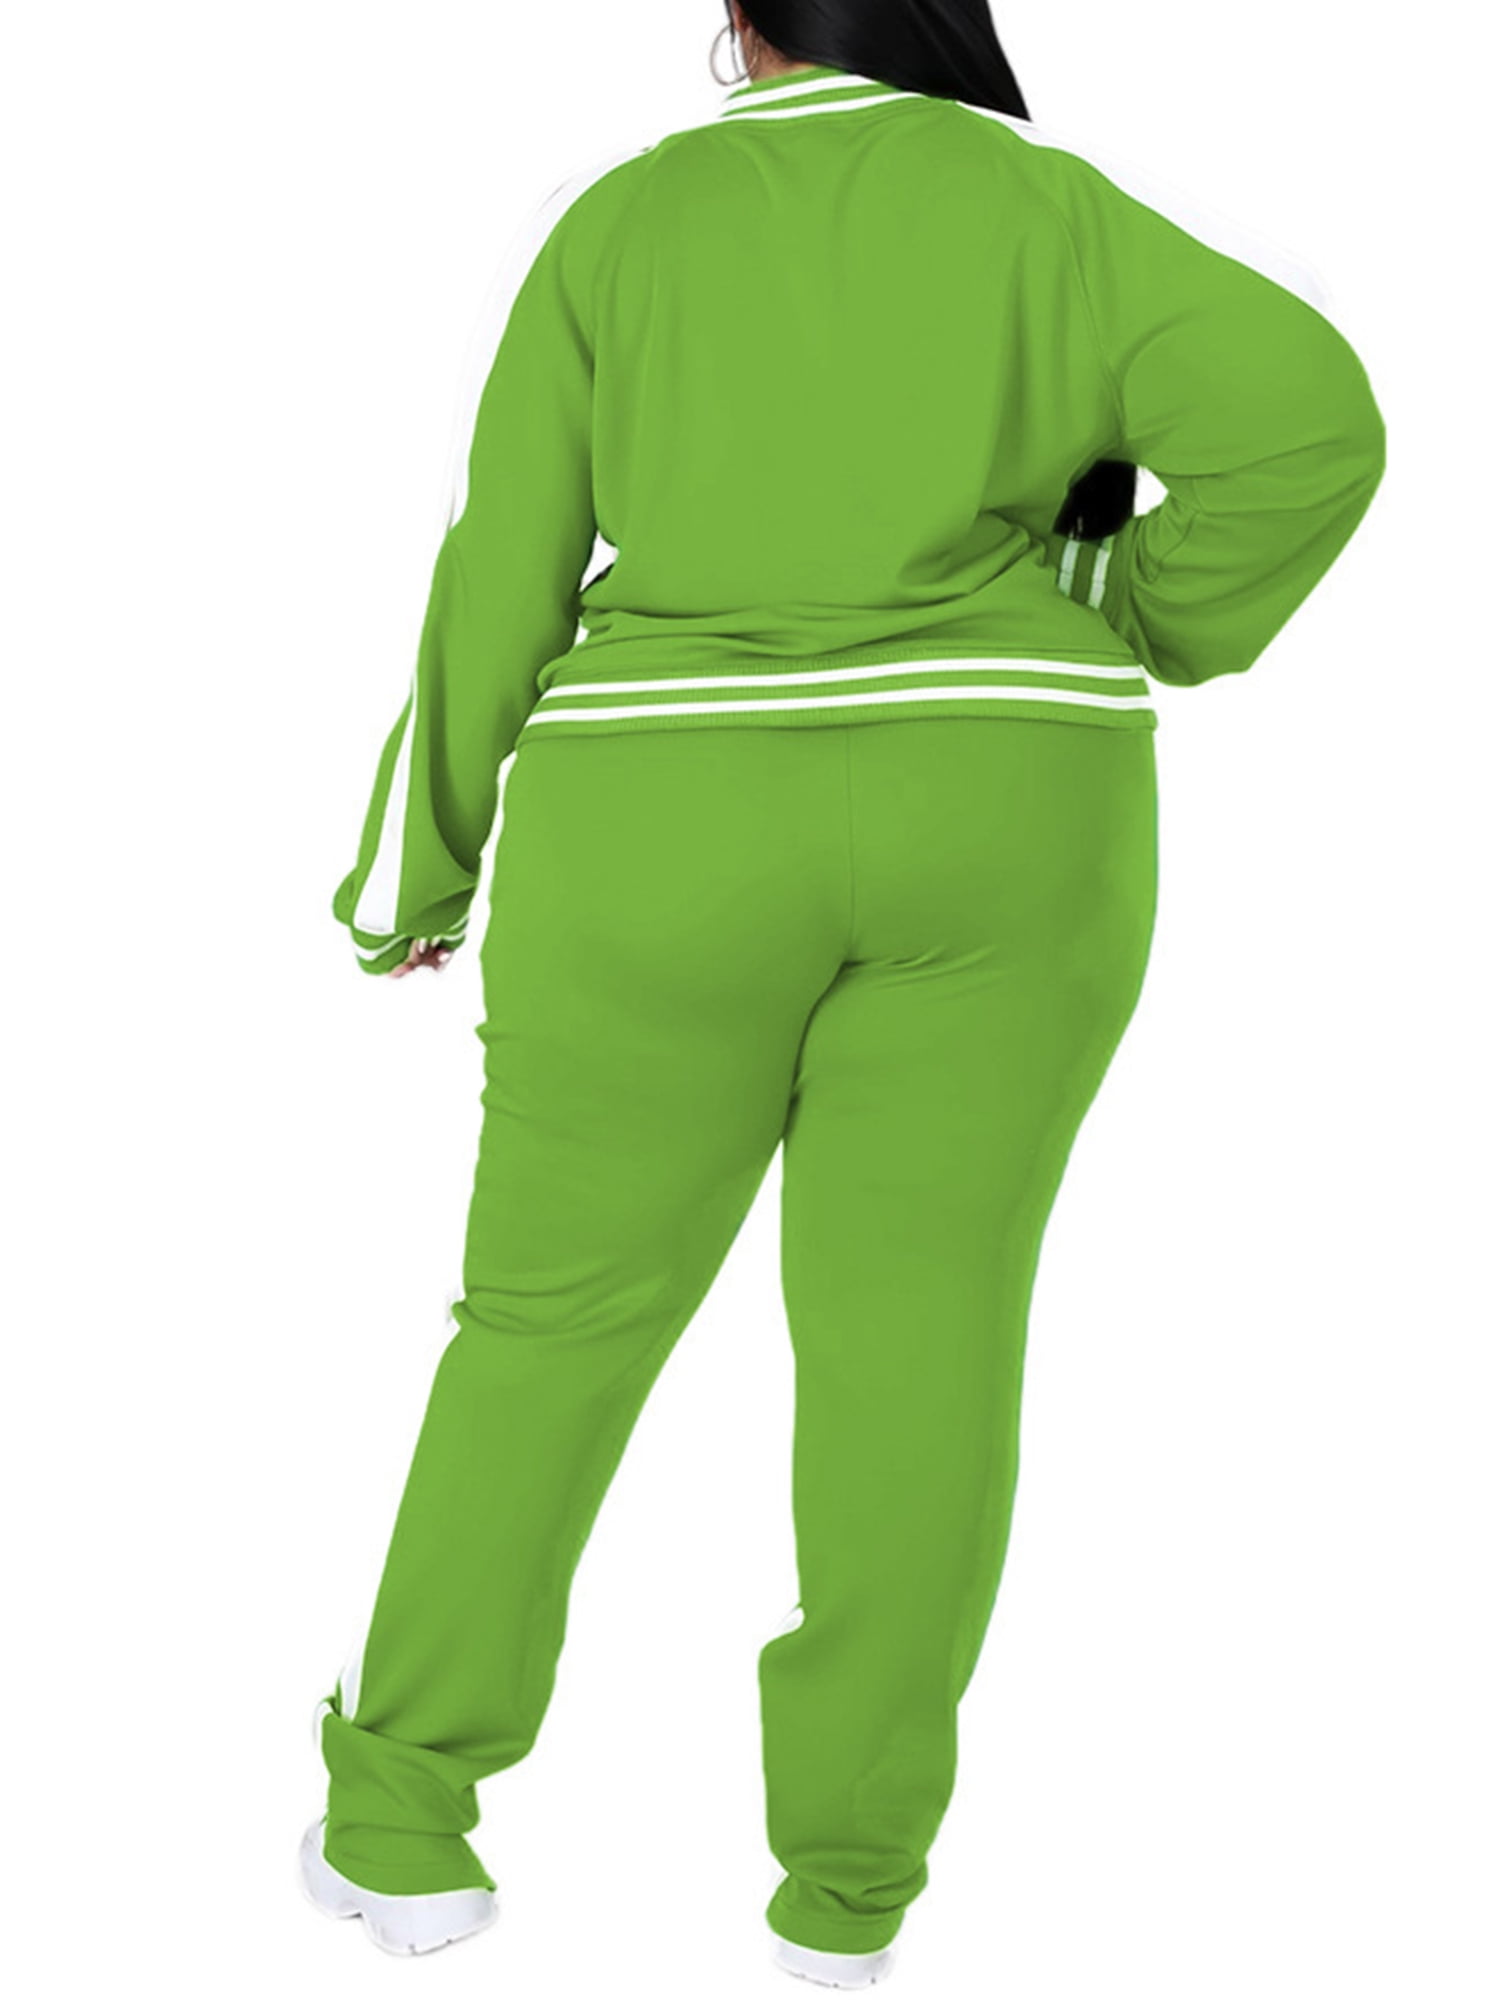 Capreze Plus Size Two Piece Outfits for Women Oversized Casual Track Suits  for Ladies Jogging Set Zipper Sweatshirt with Pockets Light Green XXXXXL